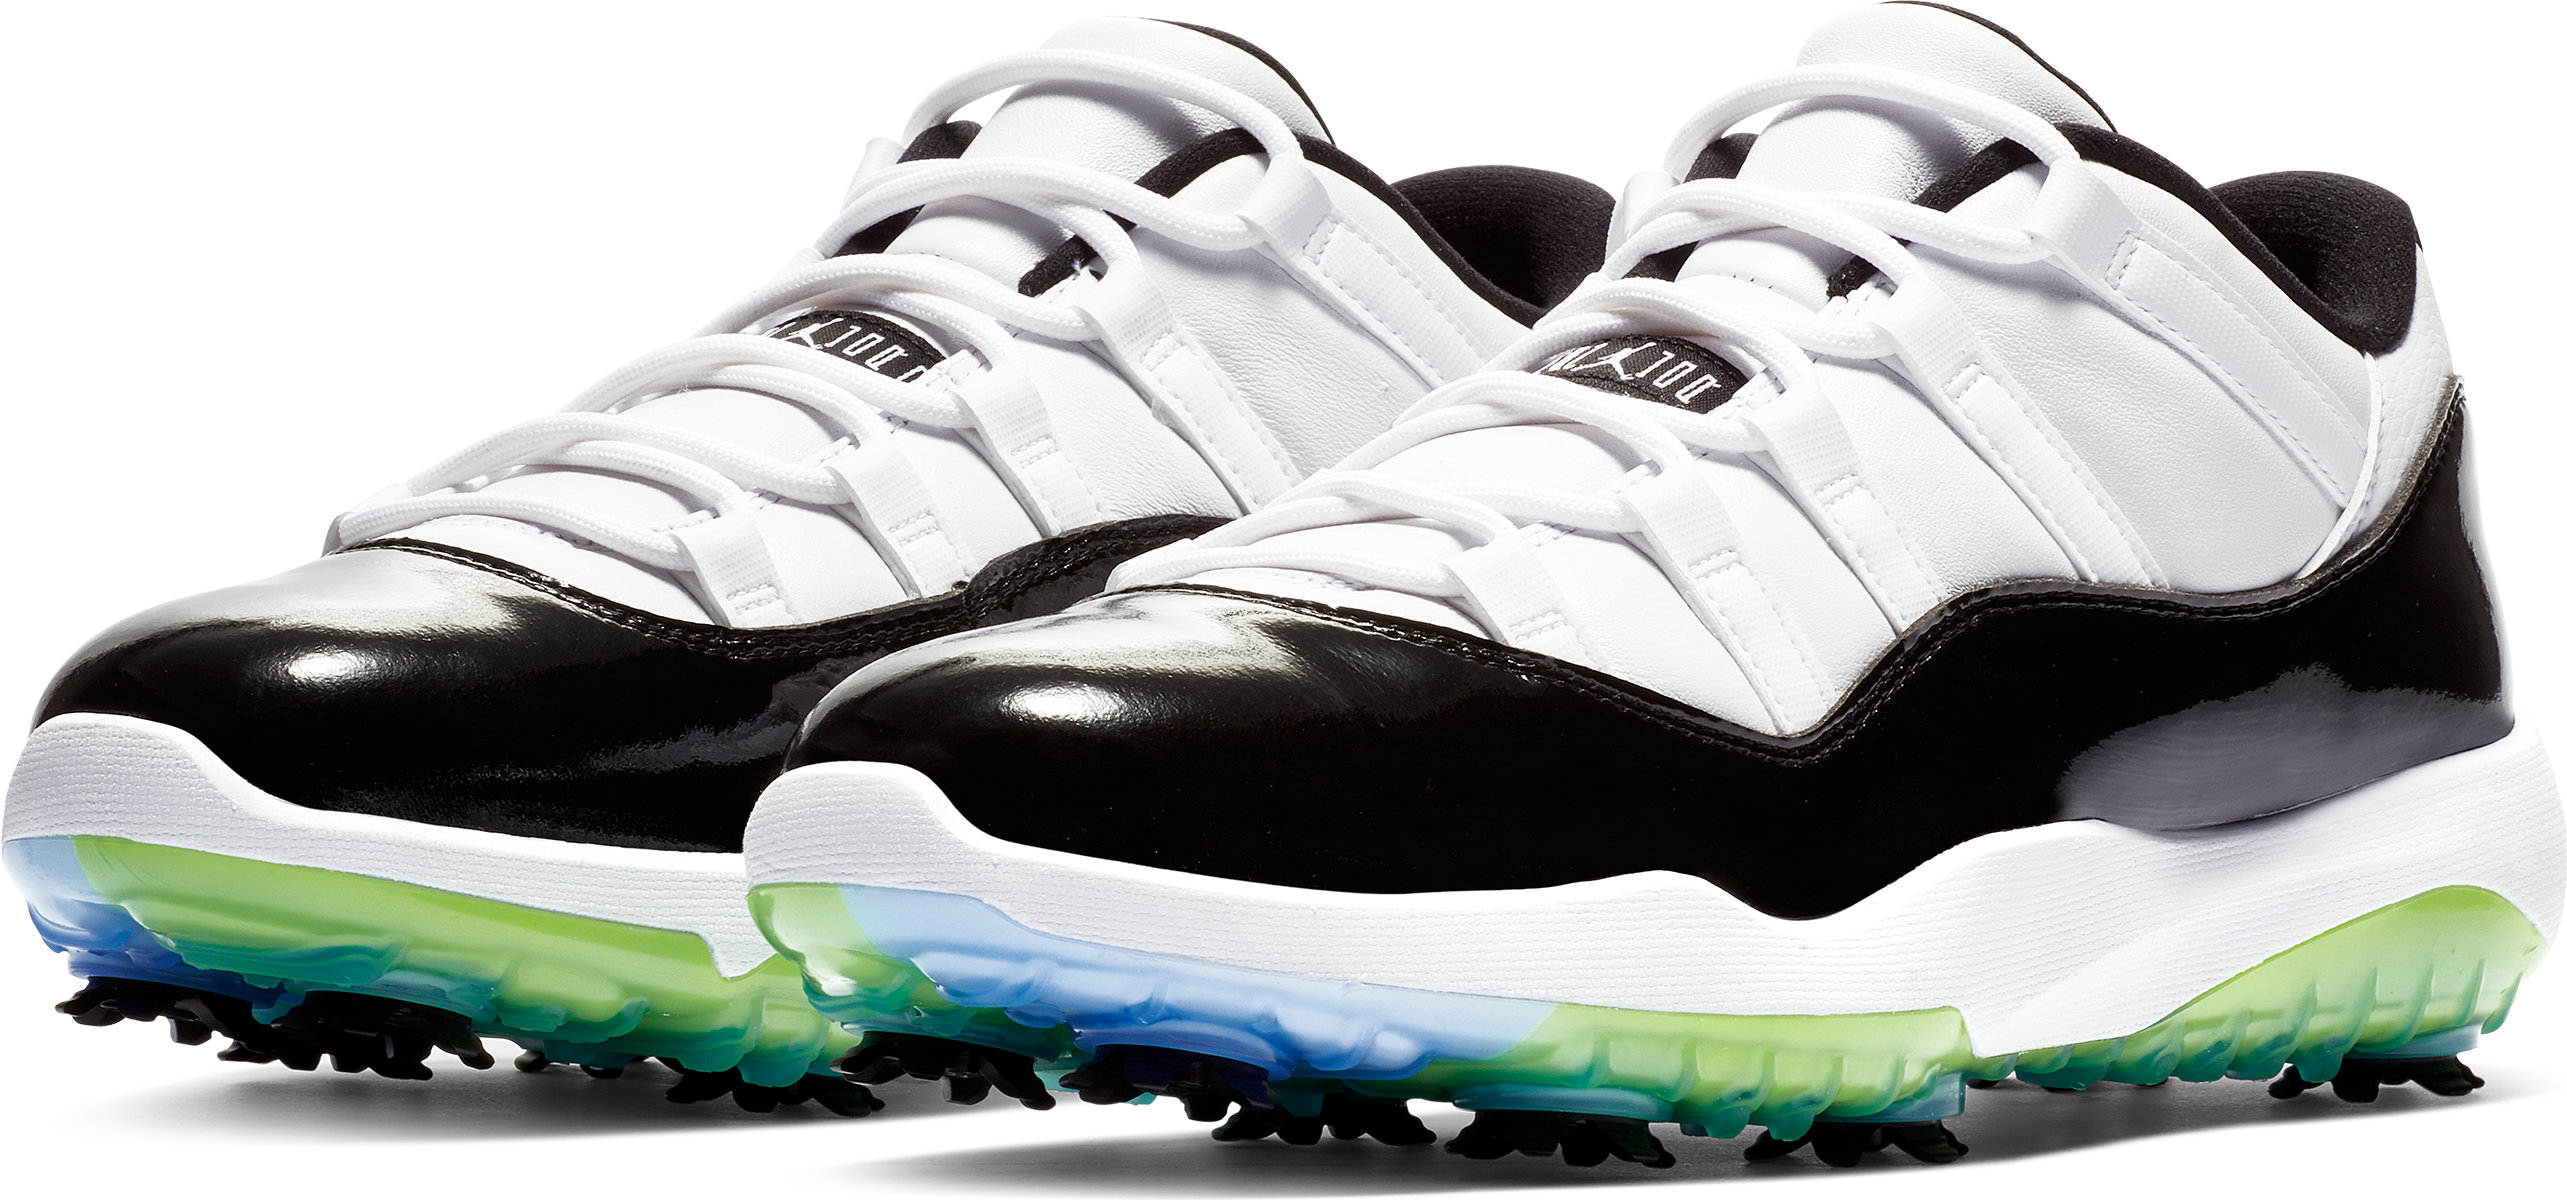 The Nike Air Jordan 11 Concord golf 